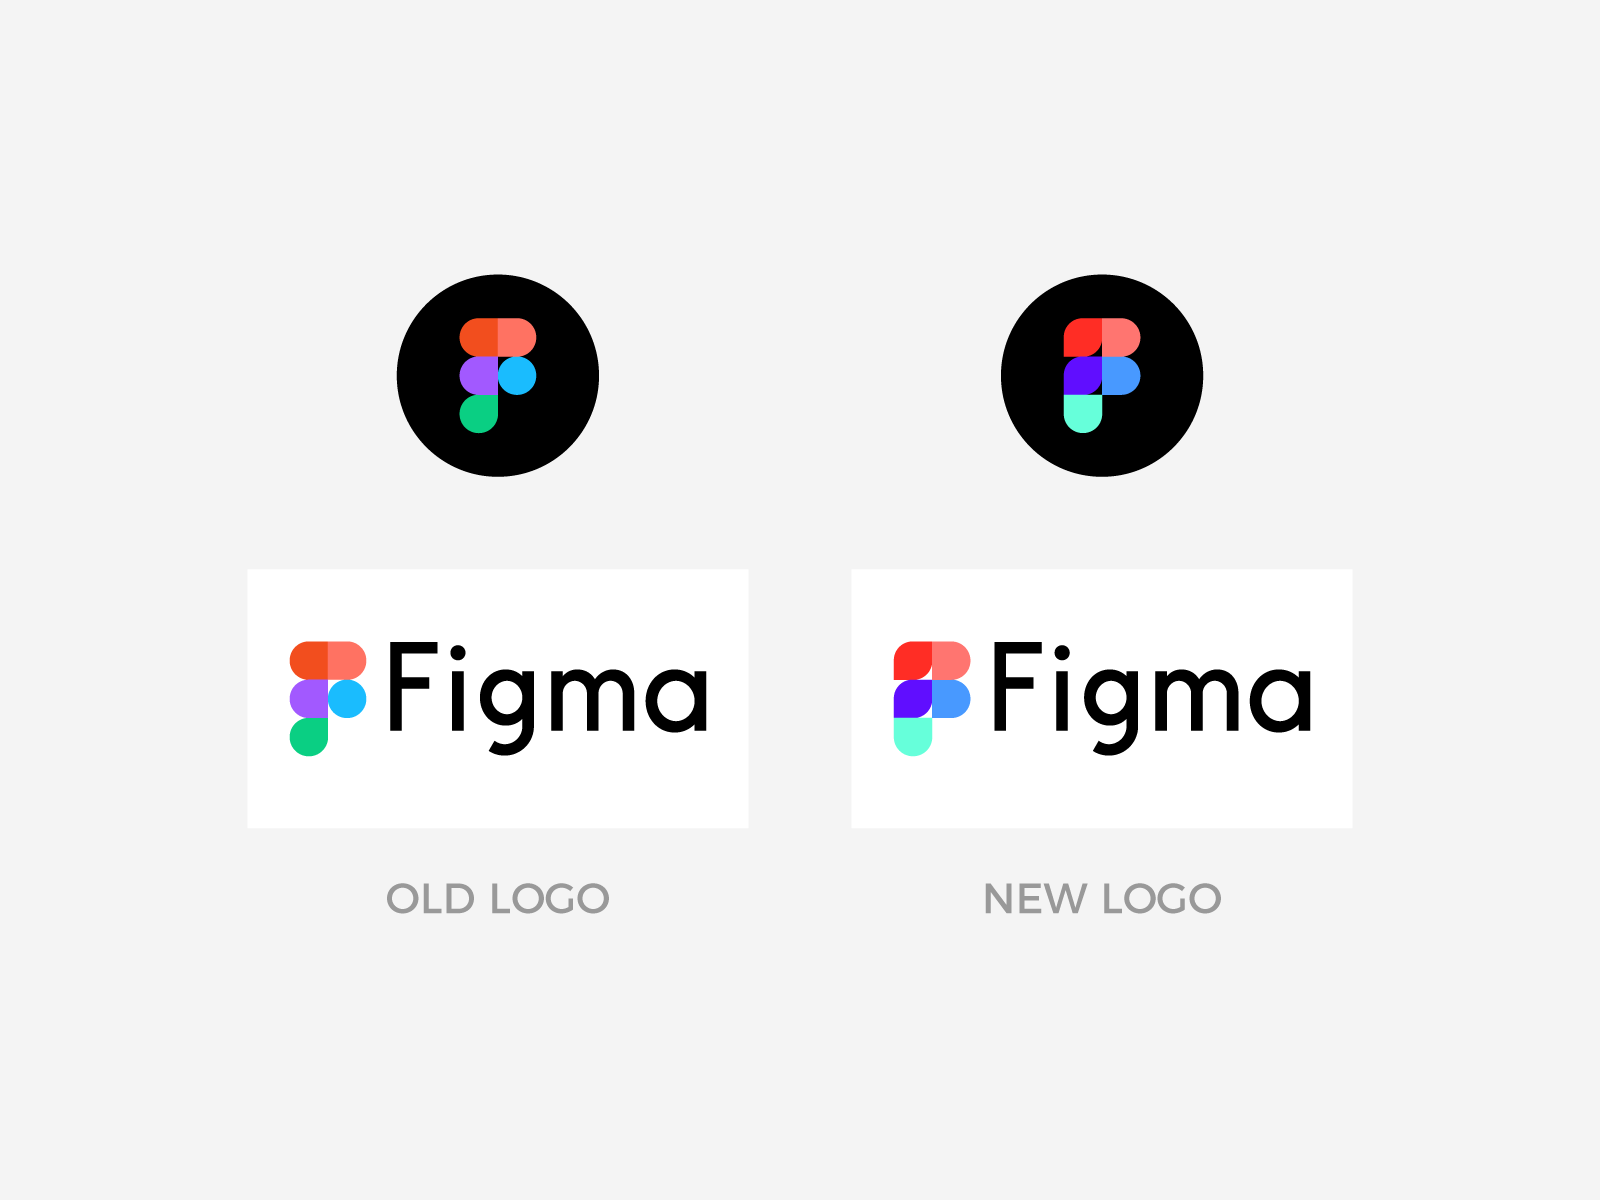 Comparison Between Sketch vs Figma vs Adobe XD - Angular Minds